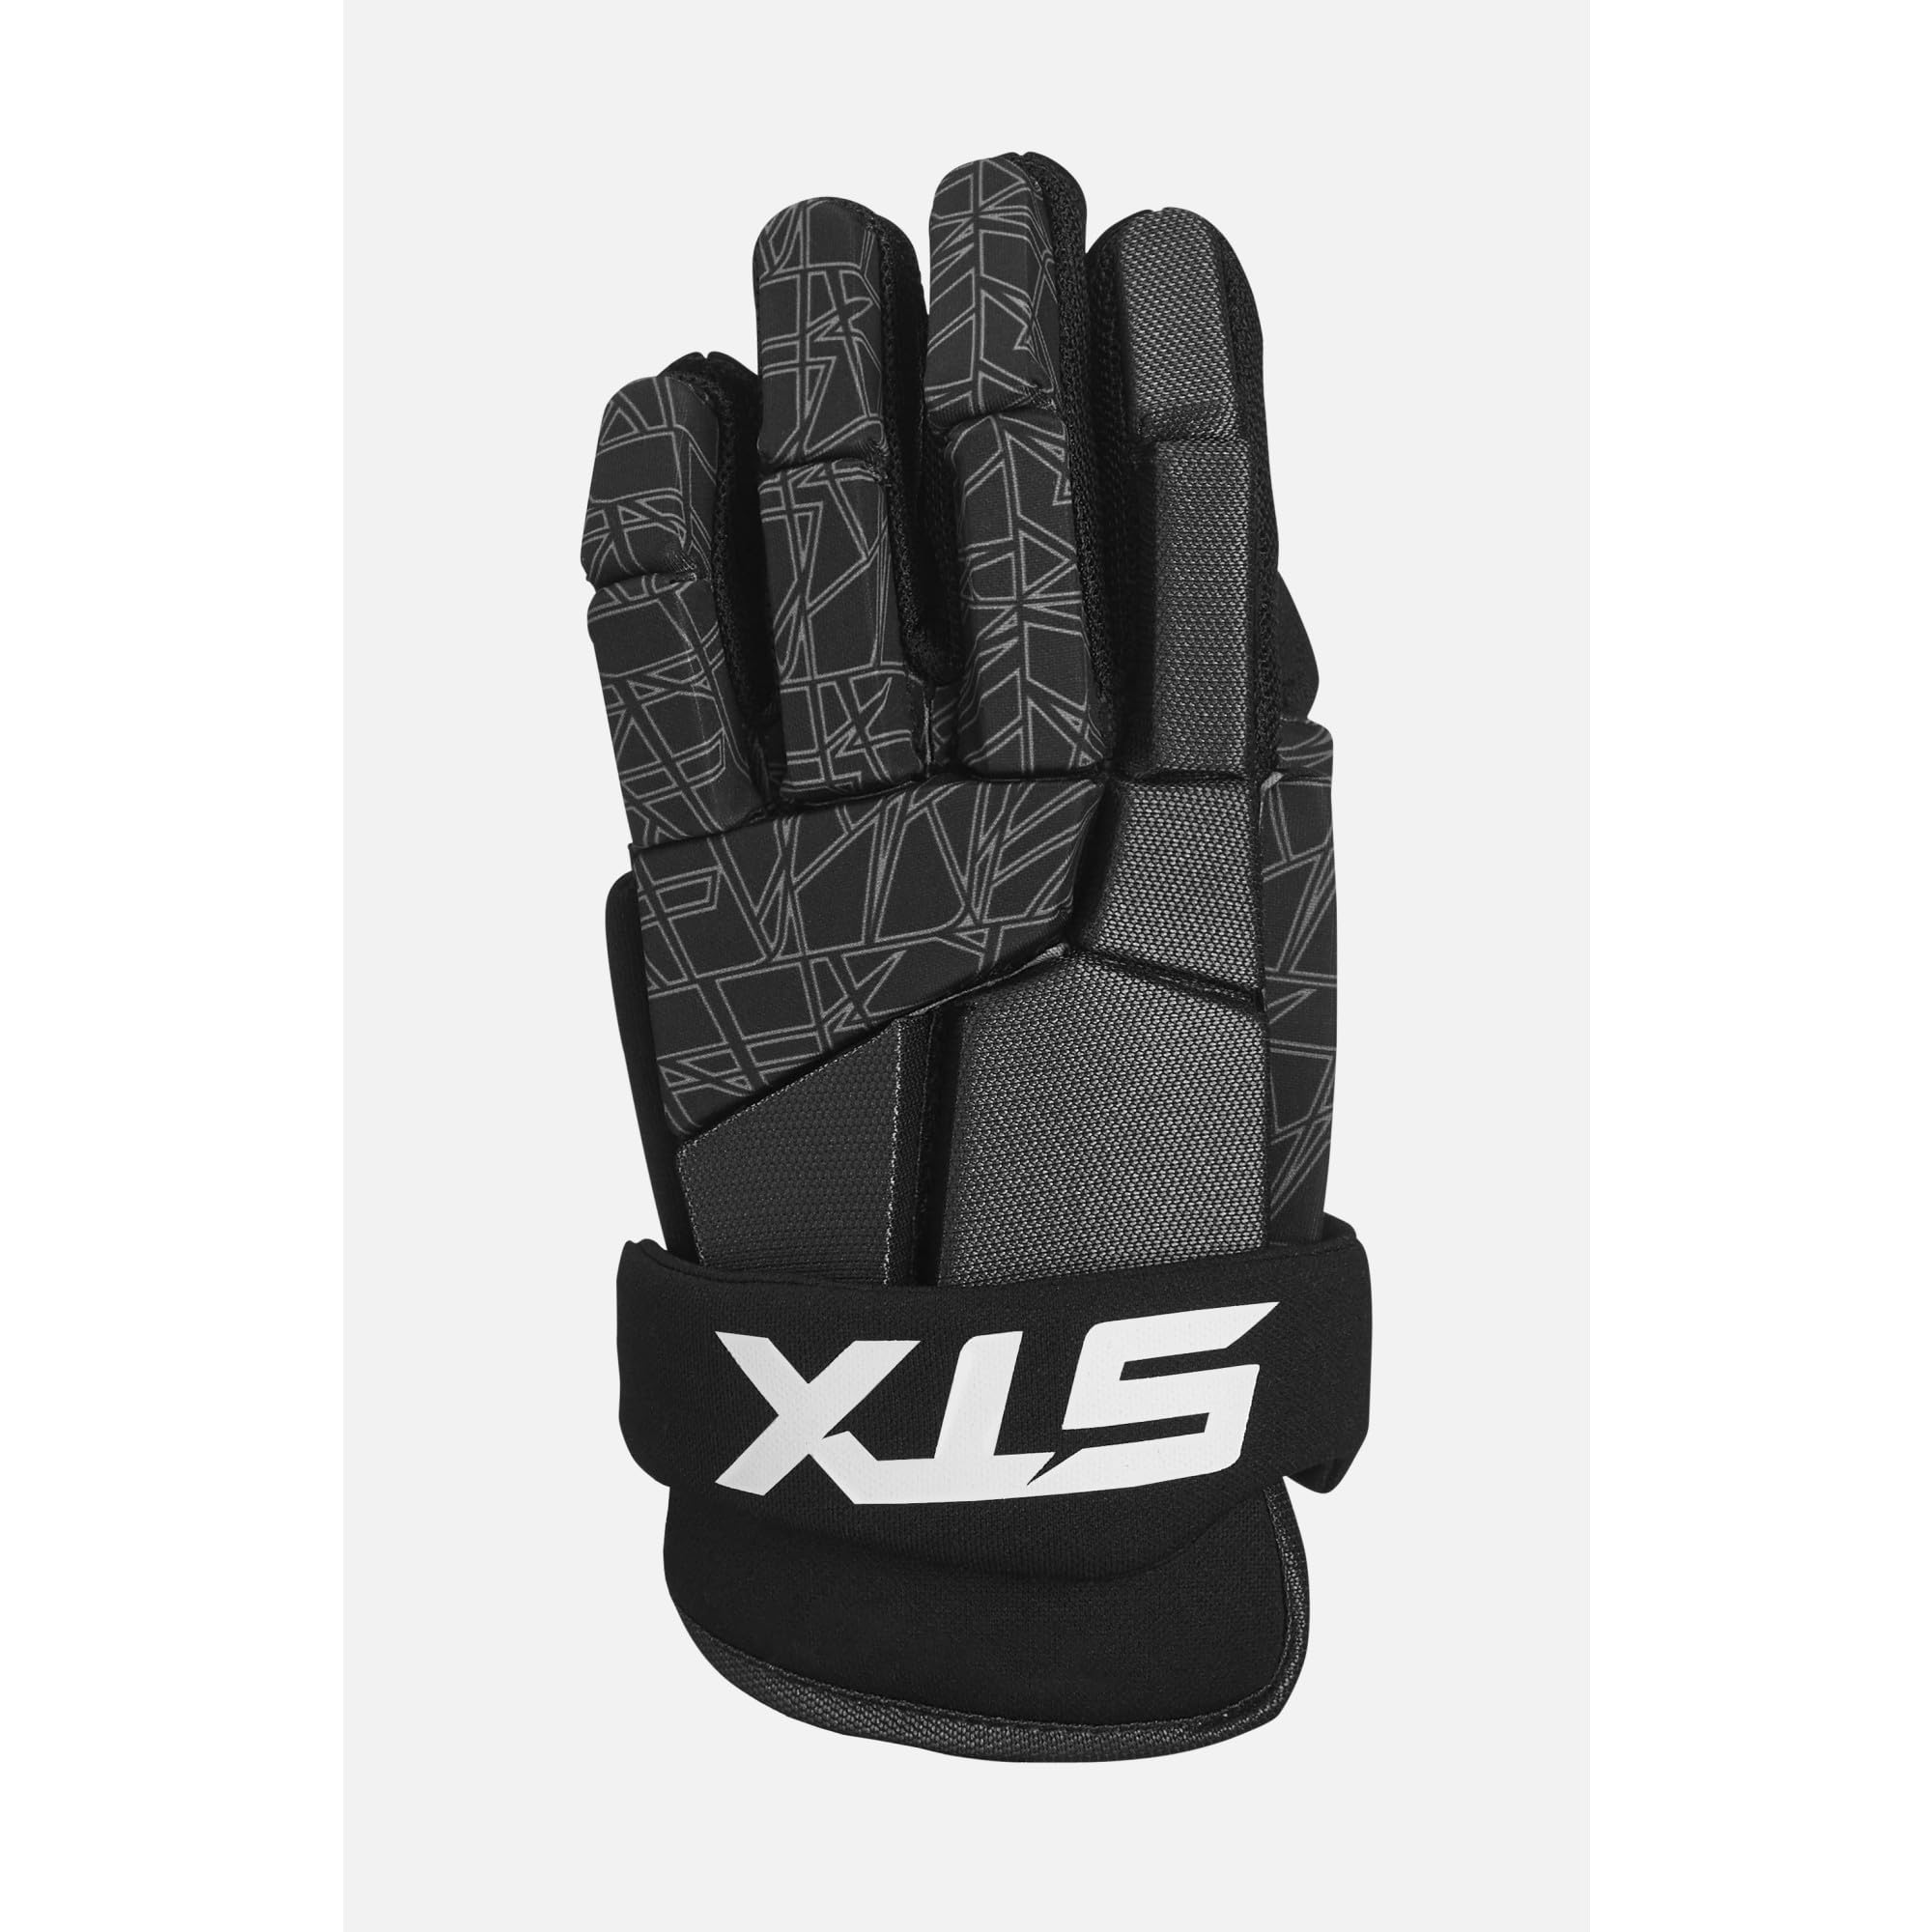 STX Stallion 75 Lacrosse Gloves, Pair, Black/Gray, Extra Small